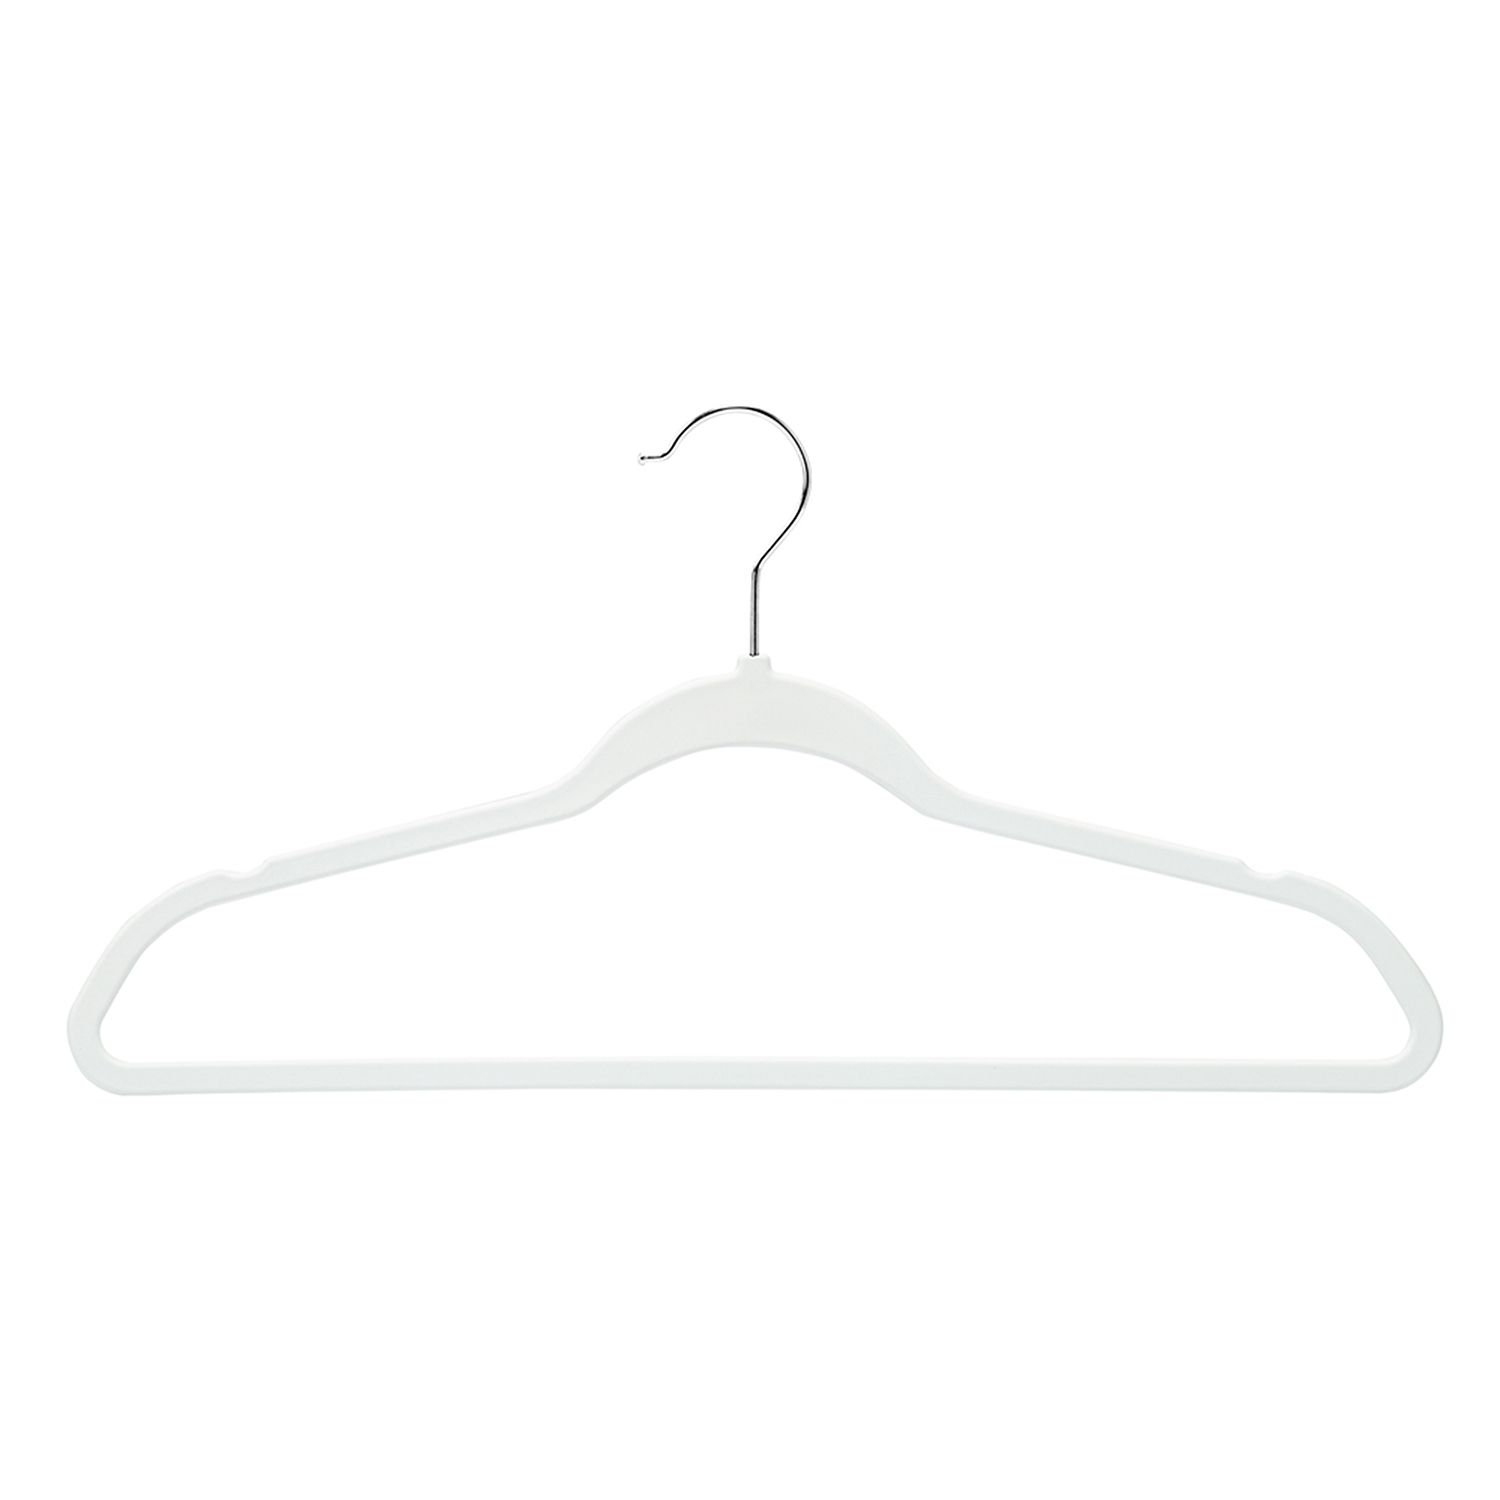 Small clothespins white 50pcs - J.K. Primeco - Online store